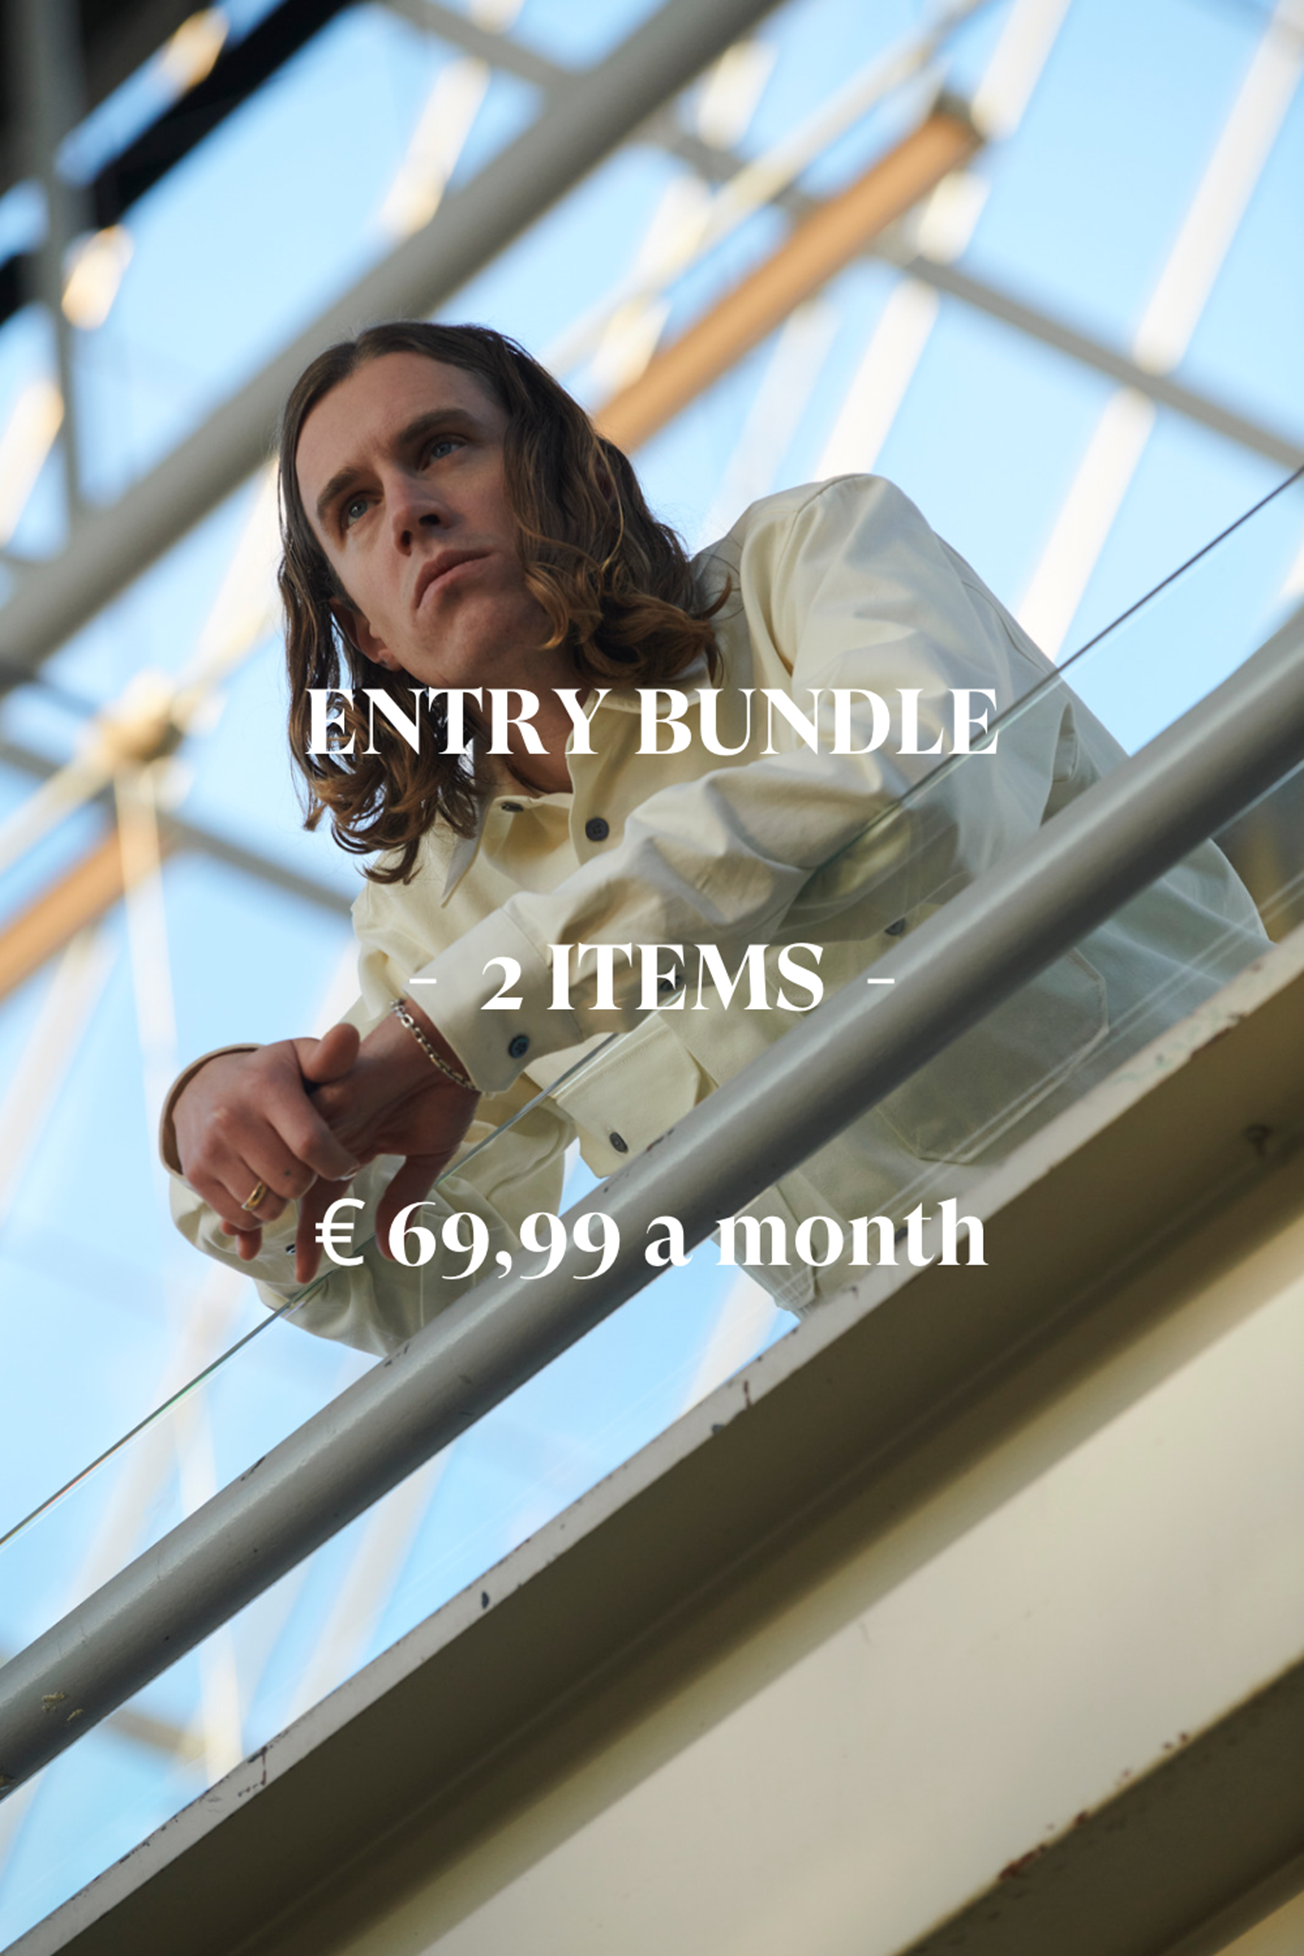 ENTRY BUNDLE - 2 ITEMS €69,99 a month